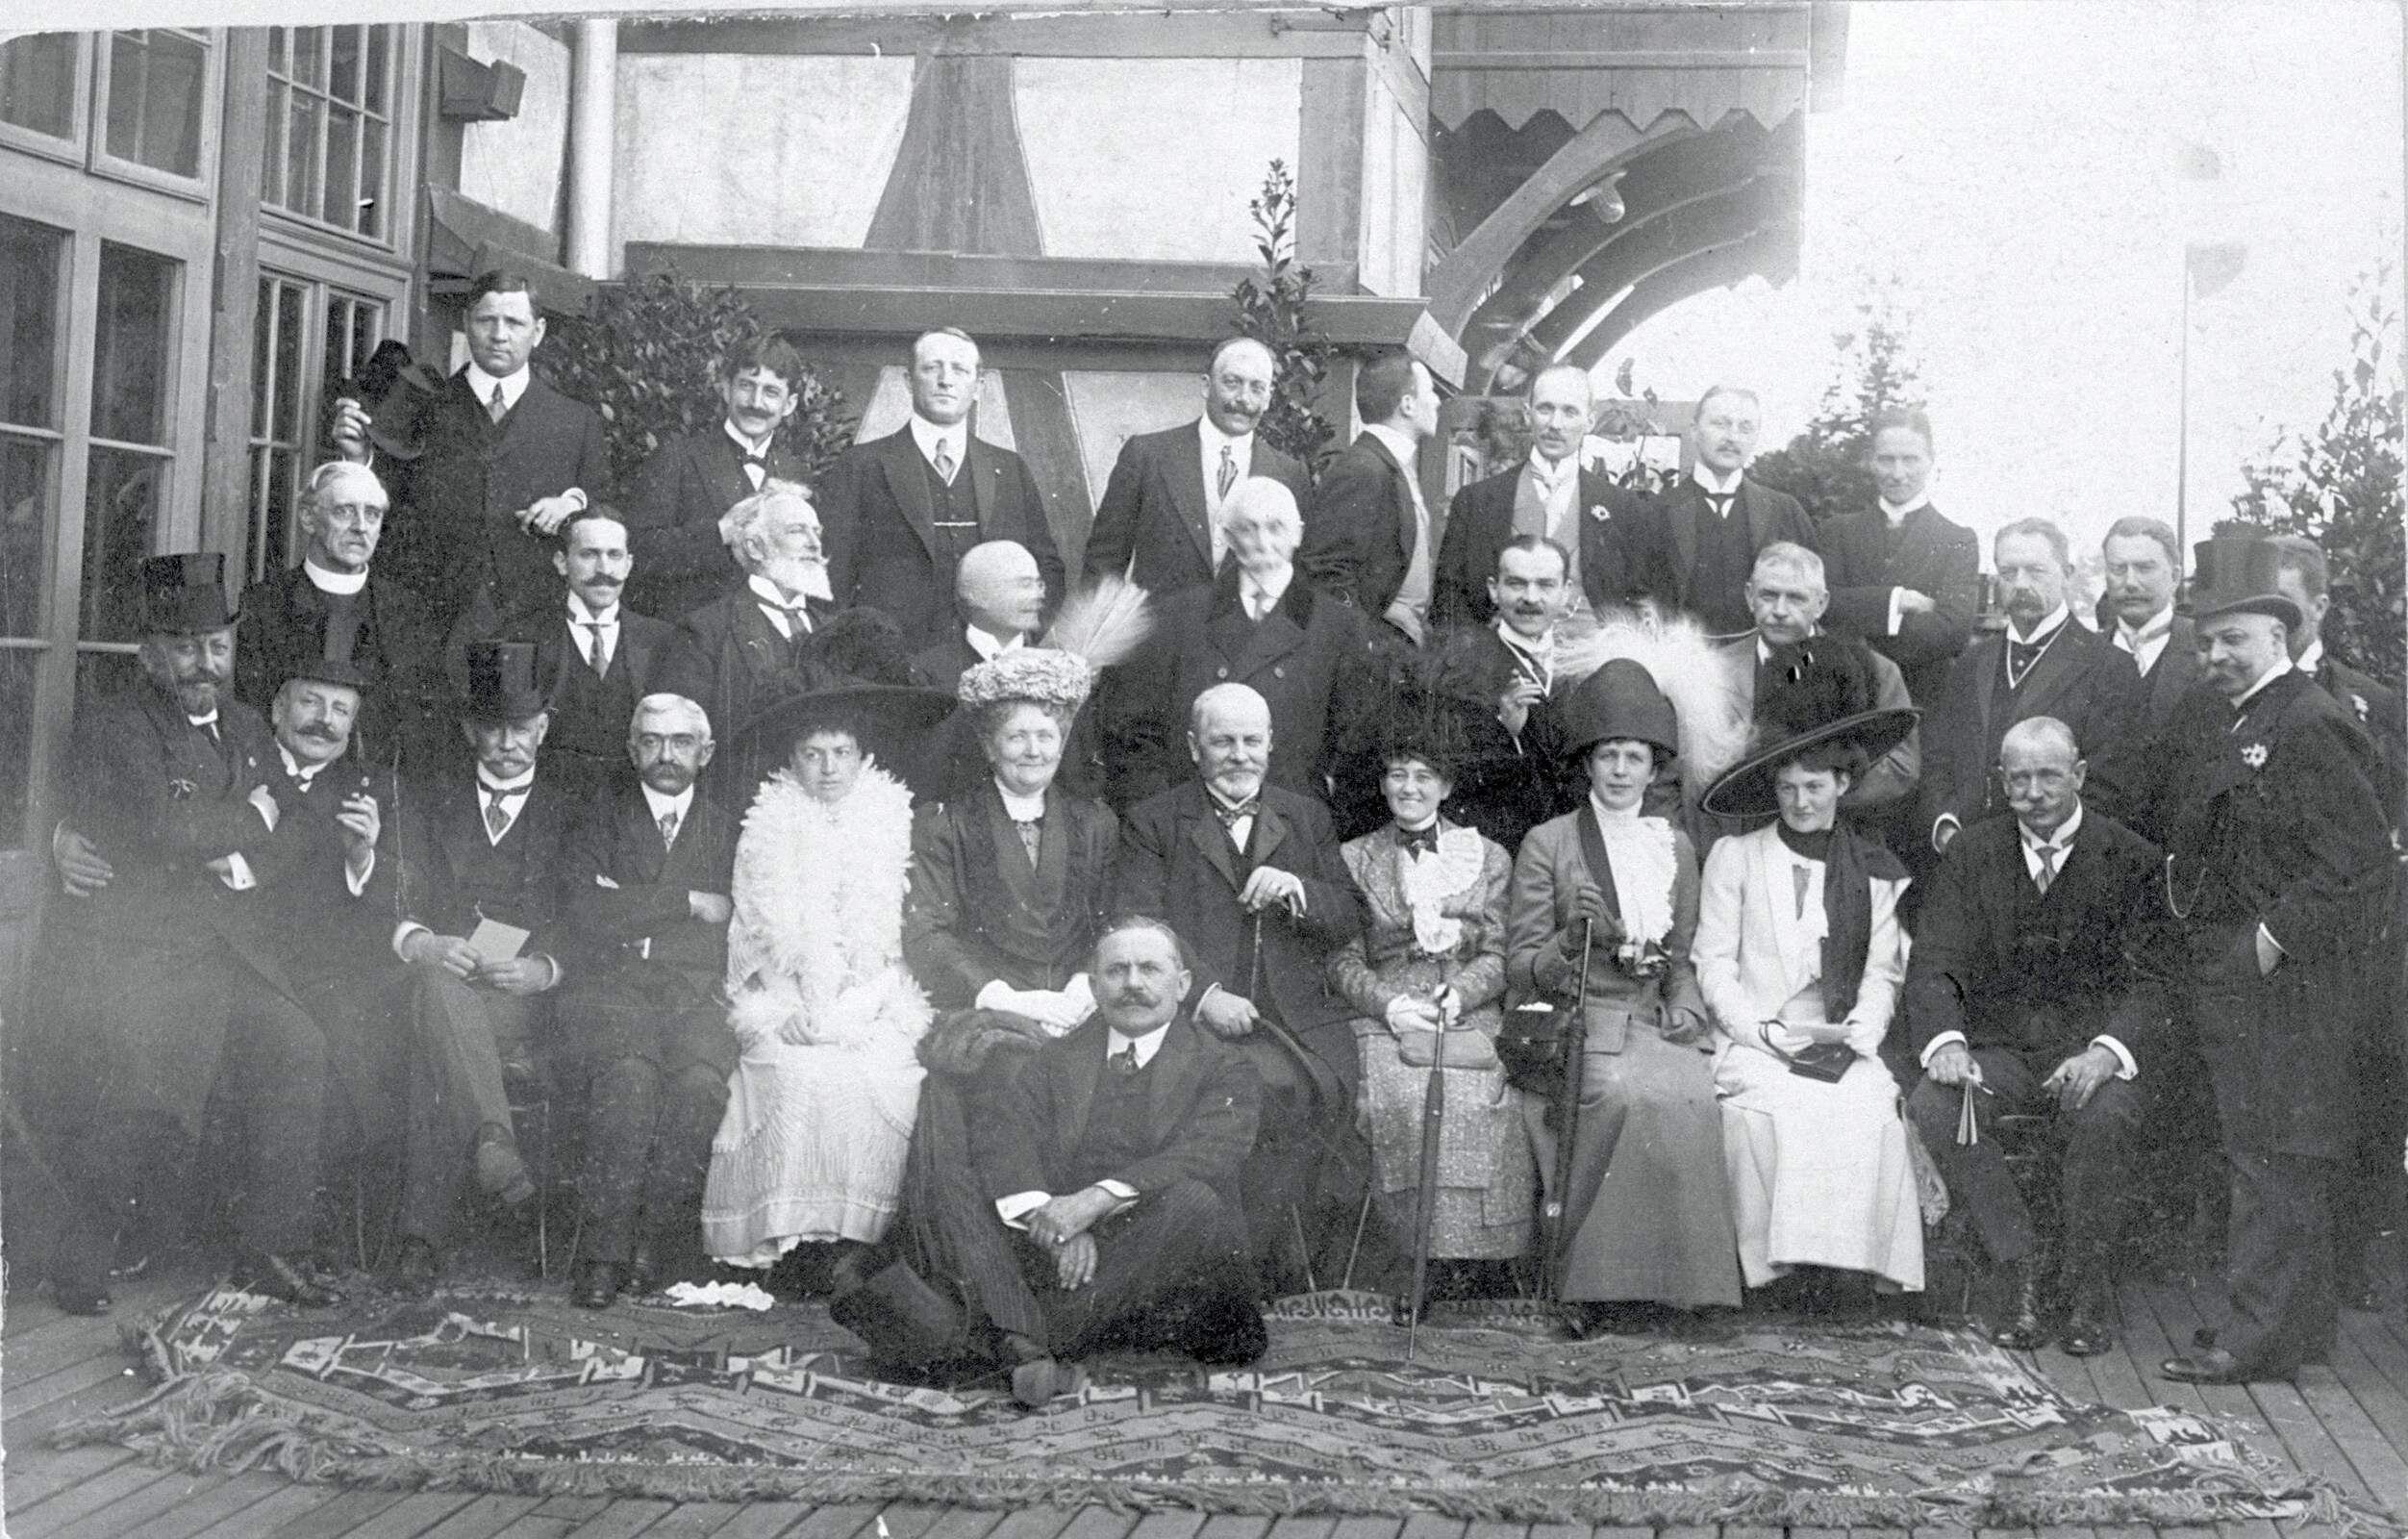  14th IOC Session, Budapest, 1911 - The IOC Members.